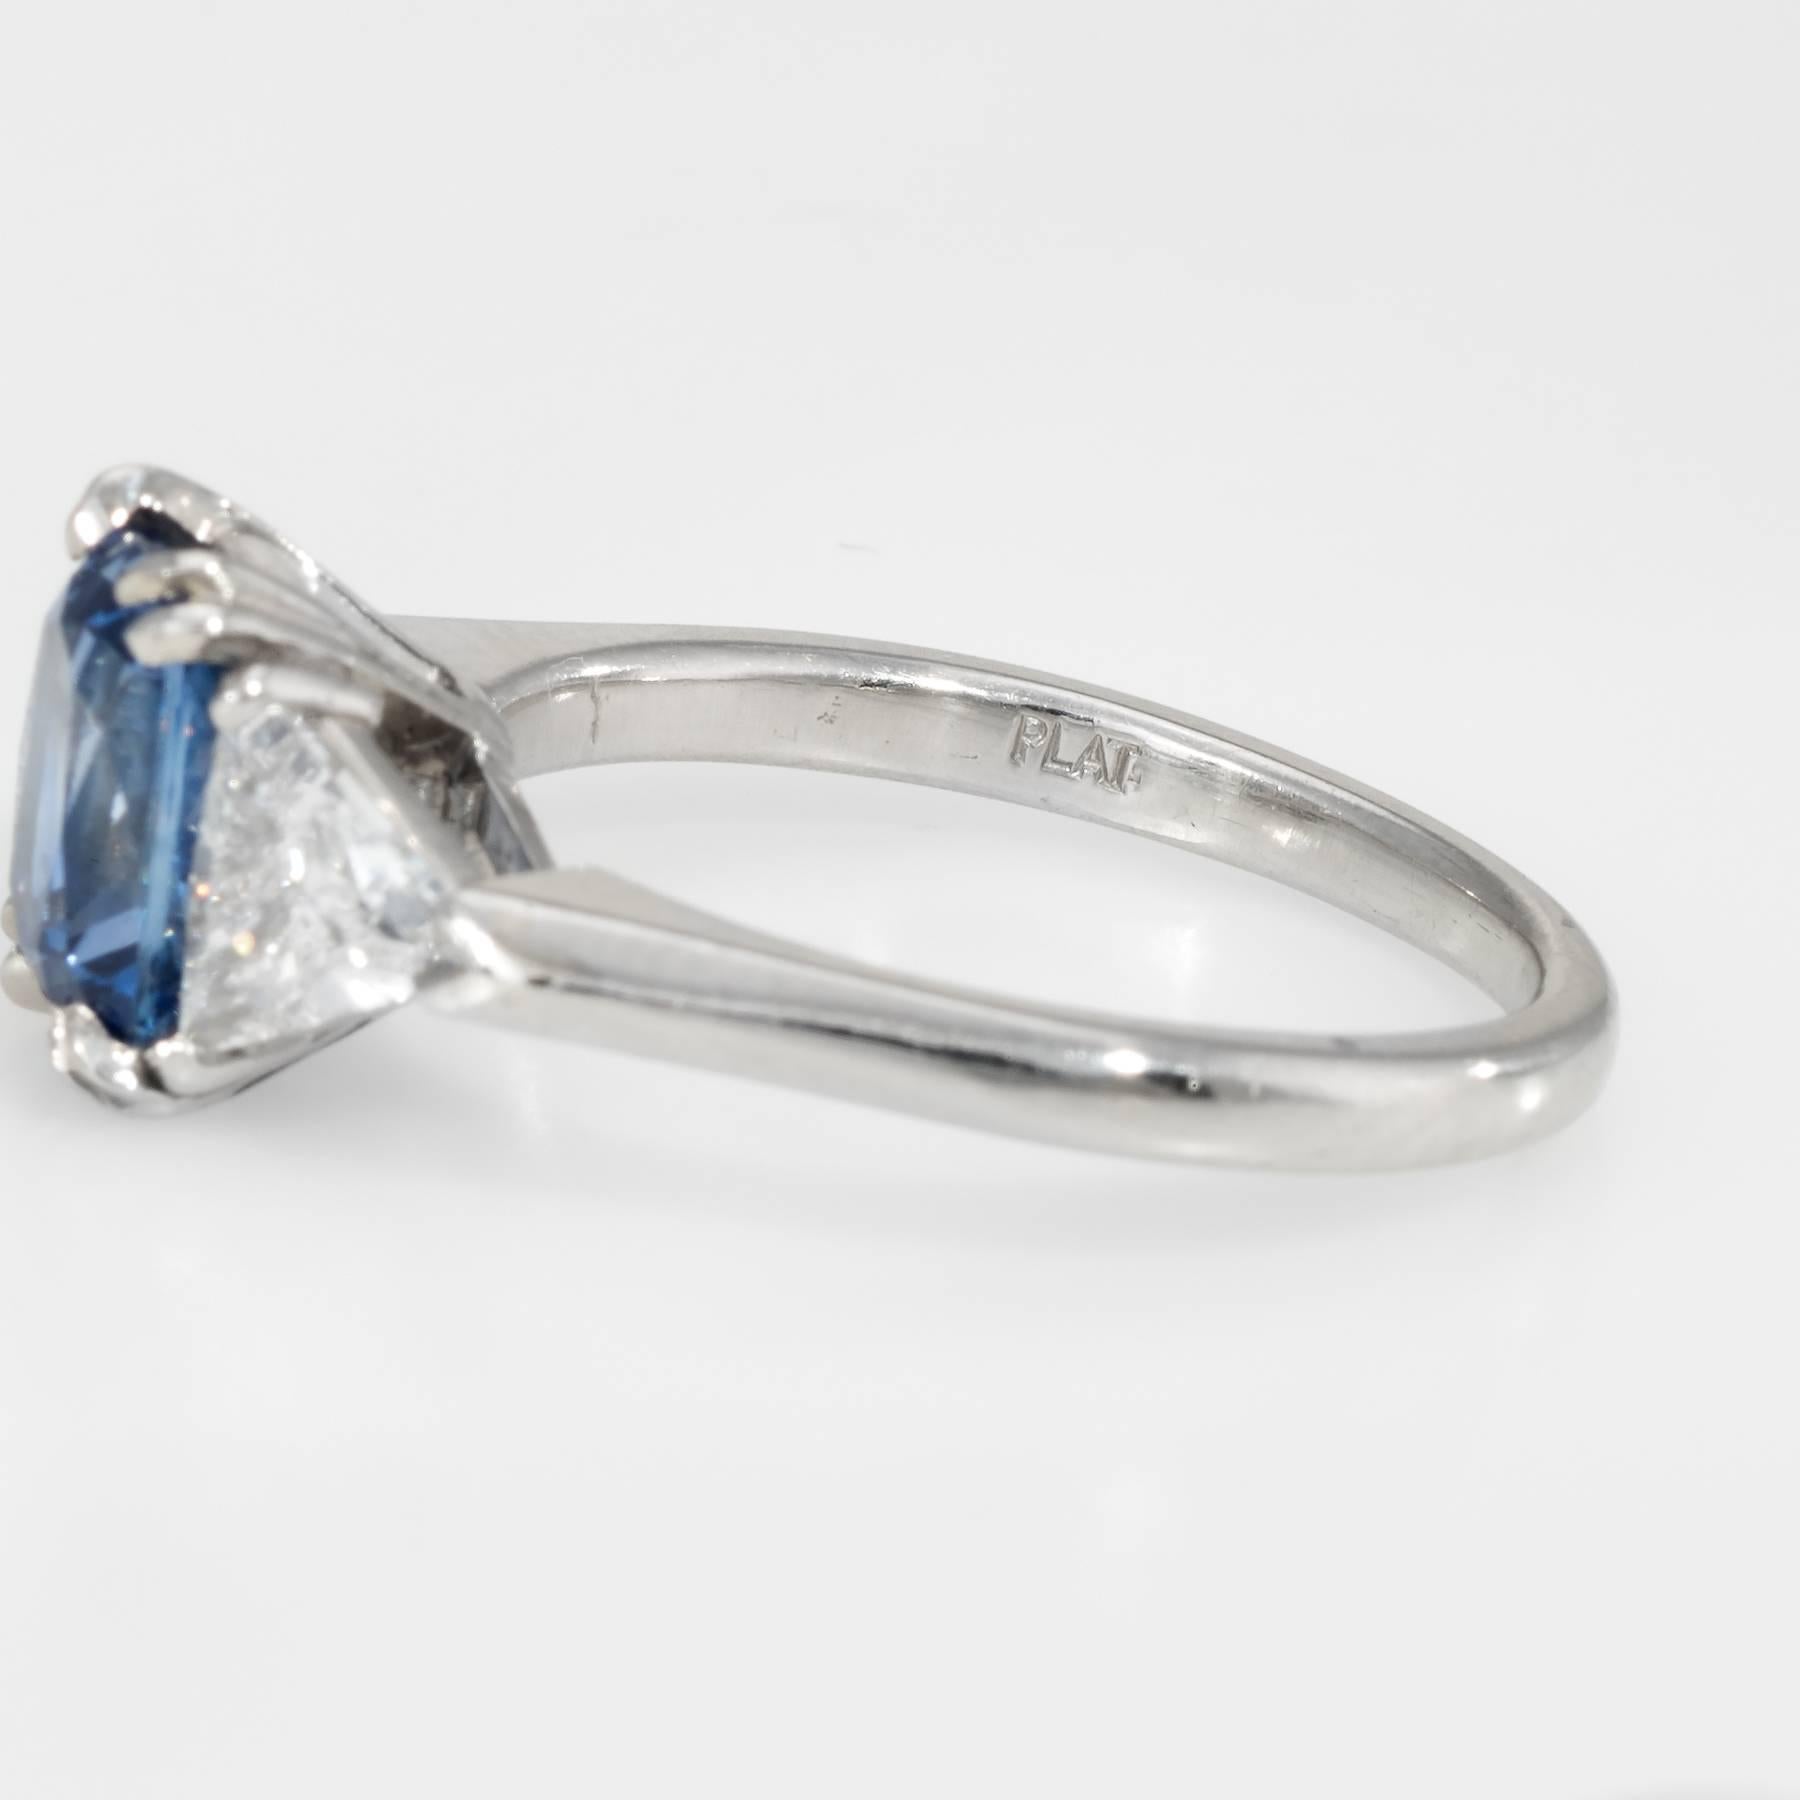 Cushion Cut Sapphire Diamond Engagement Ring Platinum Vintage Jewelry 2